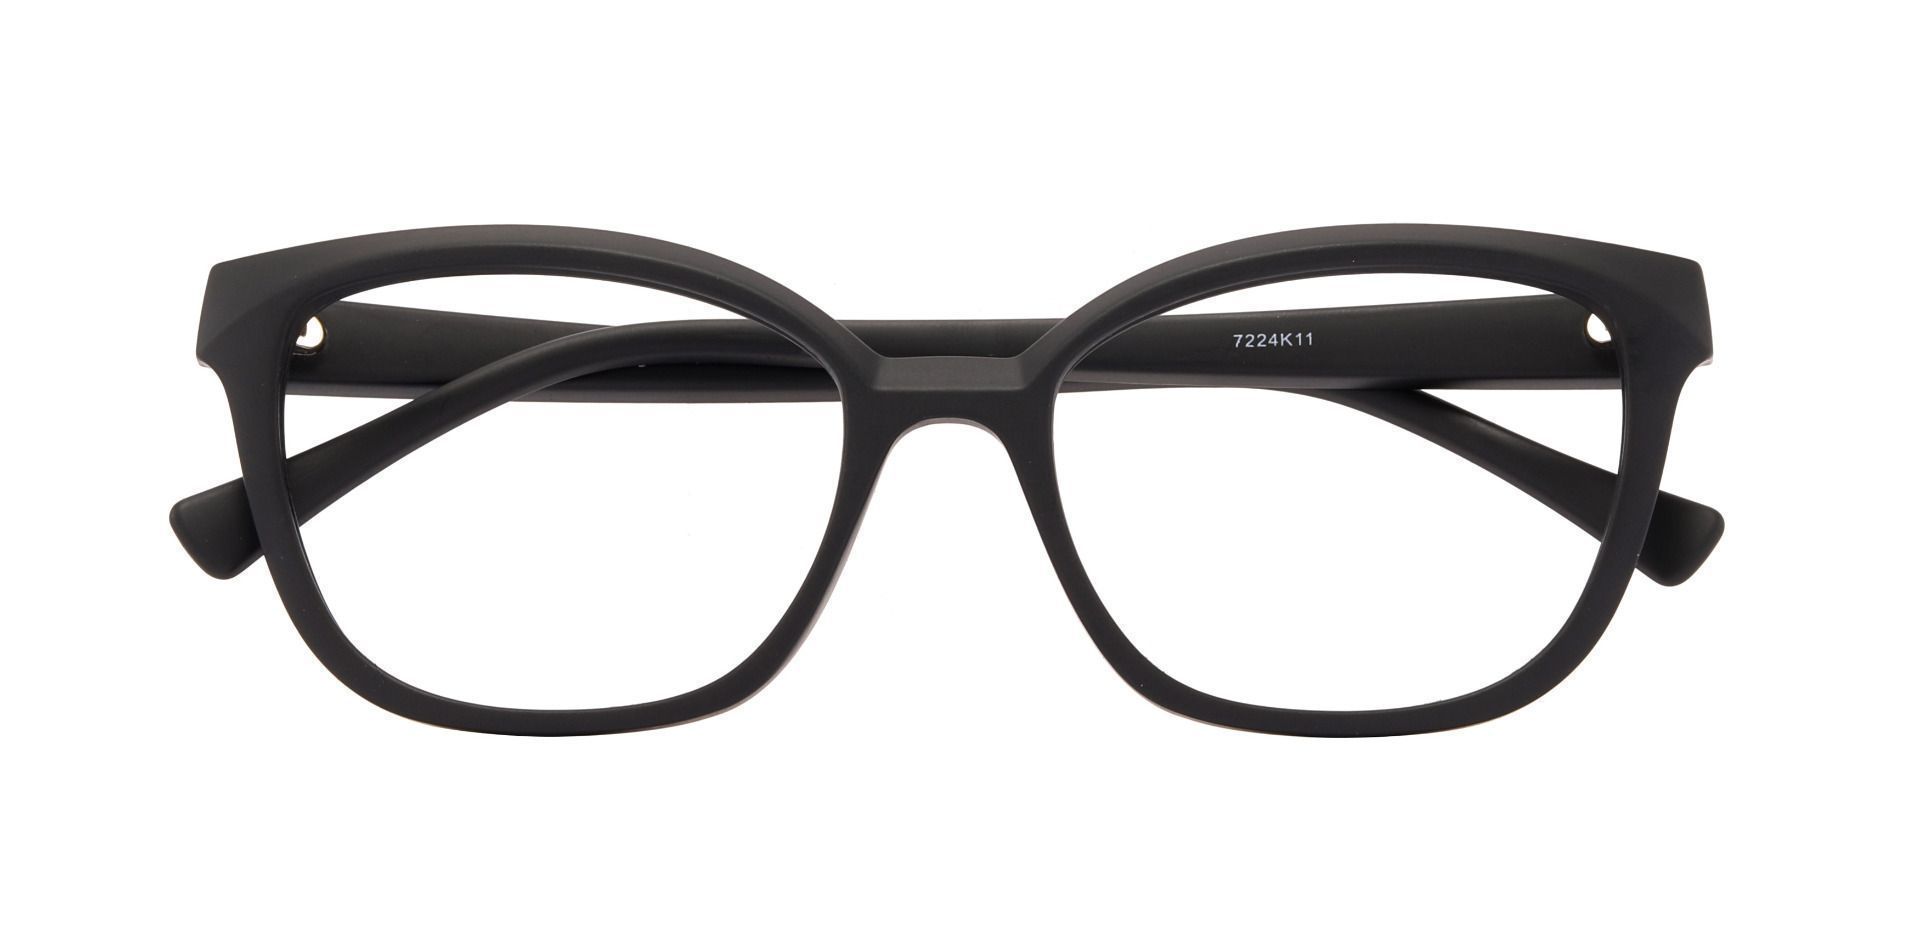 Nashville Cat Eye Prescription Glasses - Black